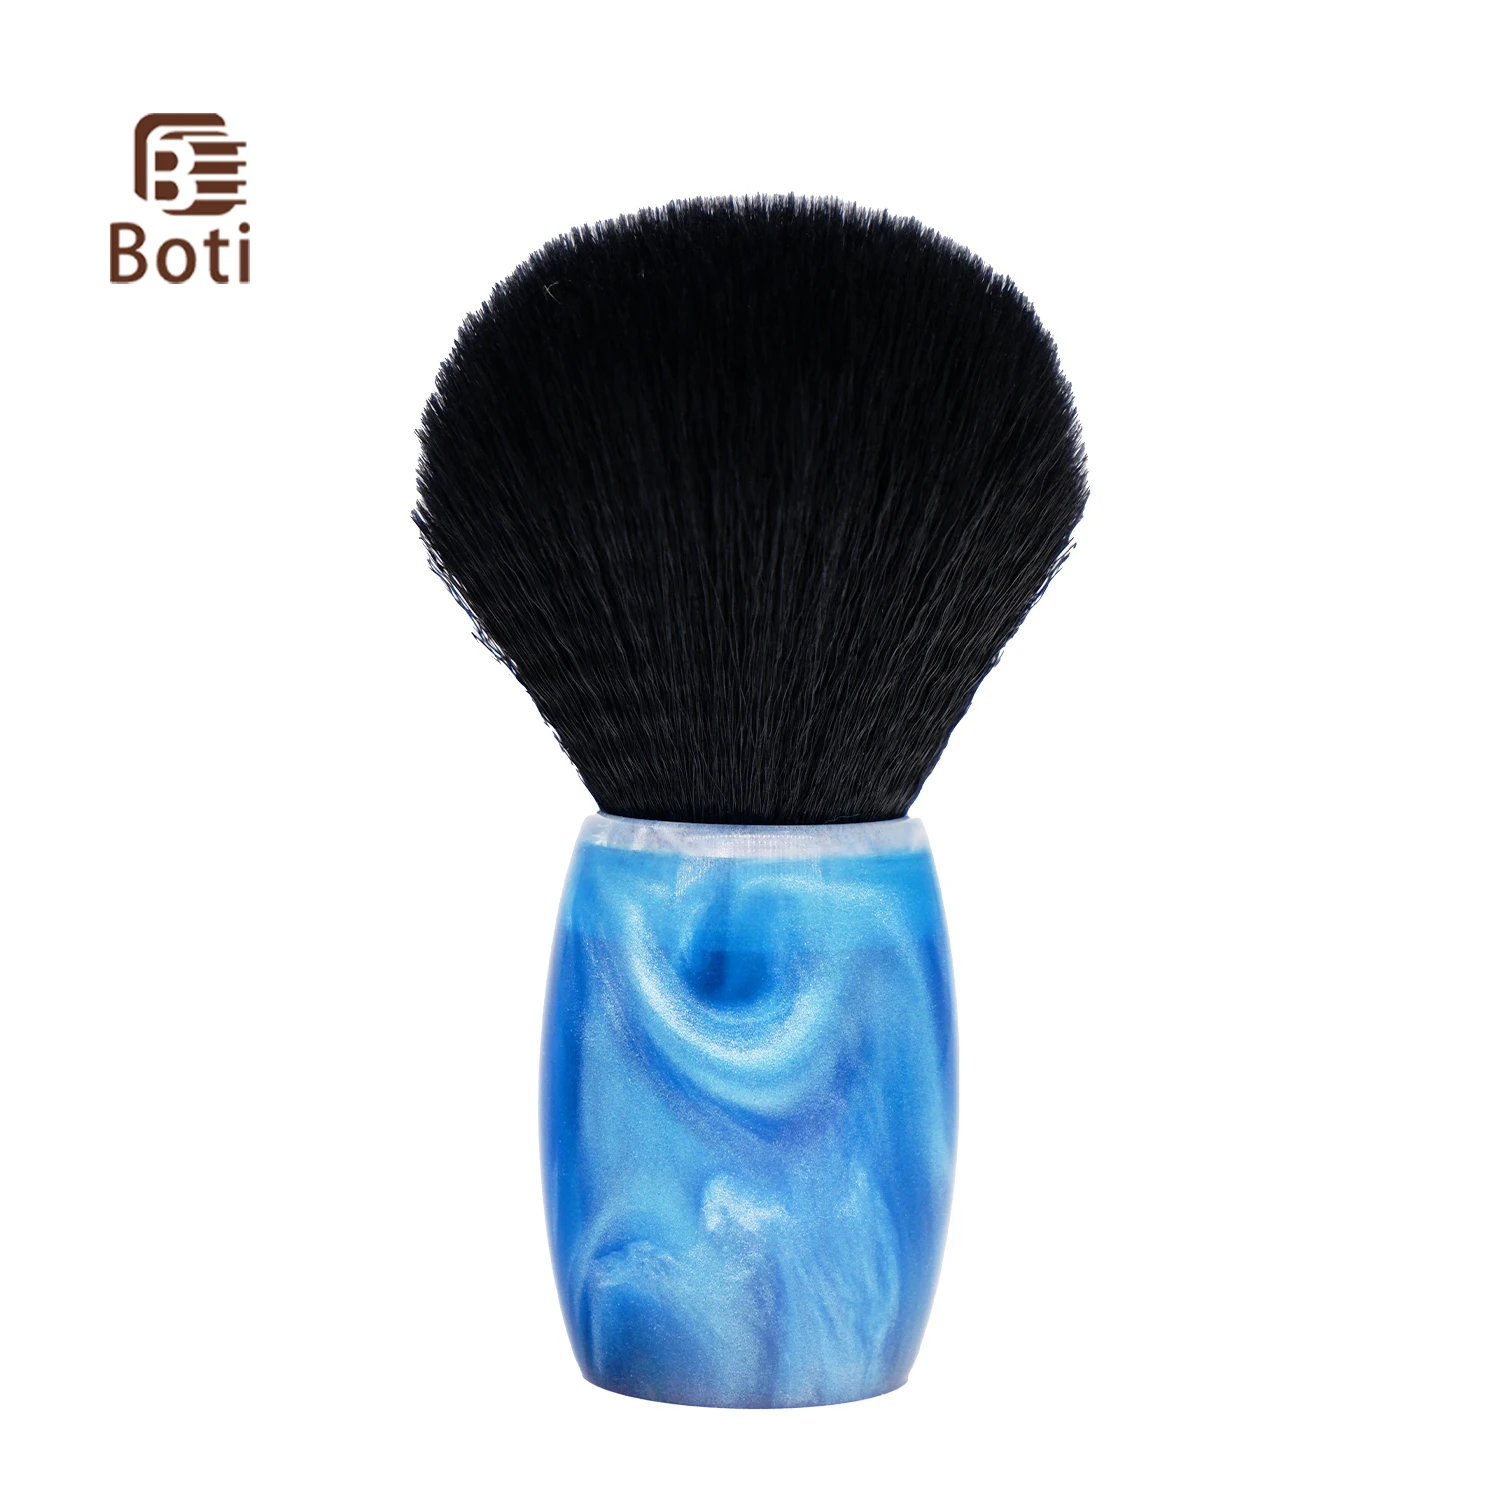 Boti Shaving Brush Pure Black Synthetic Hair Knot and Star Sea Resin Handle Men's Beauty Beard Tools